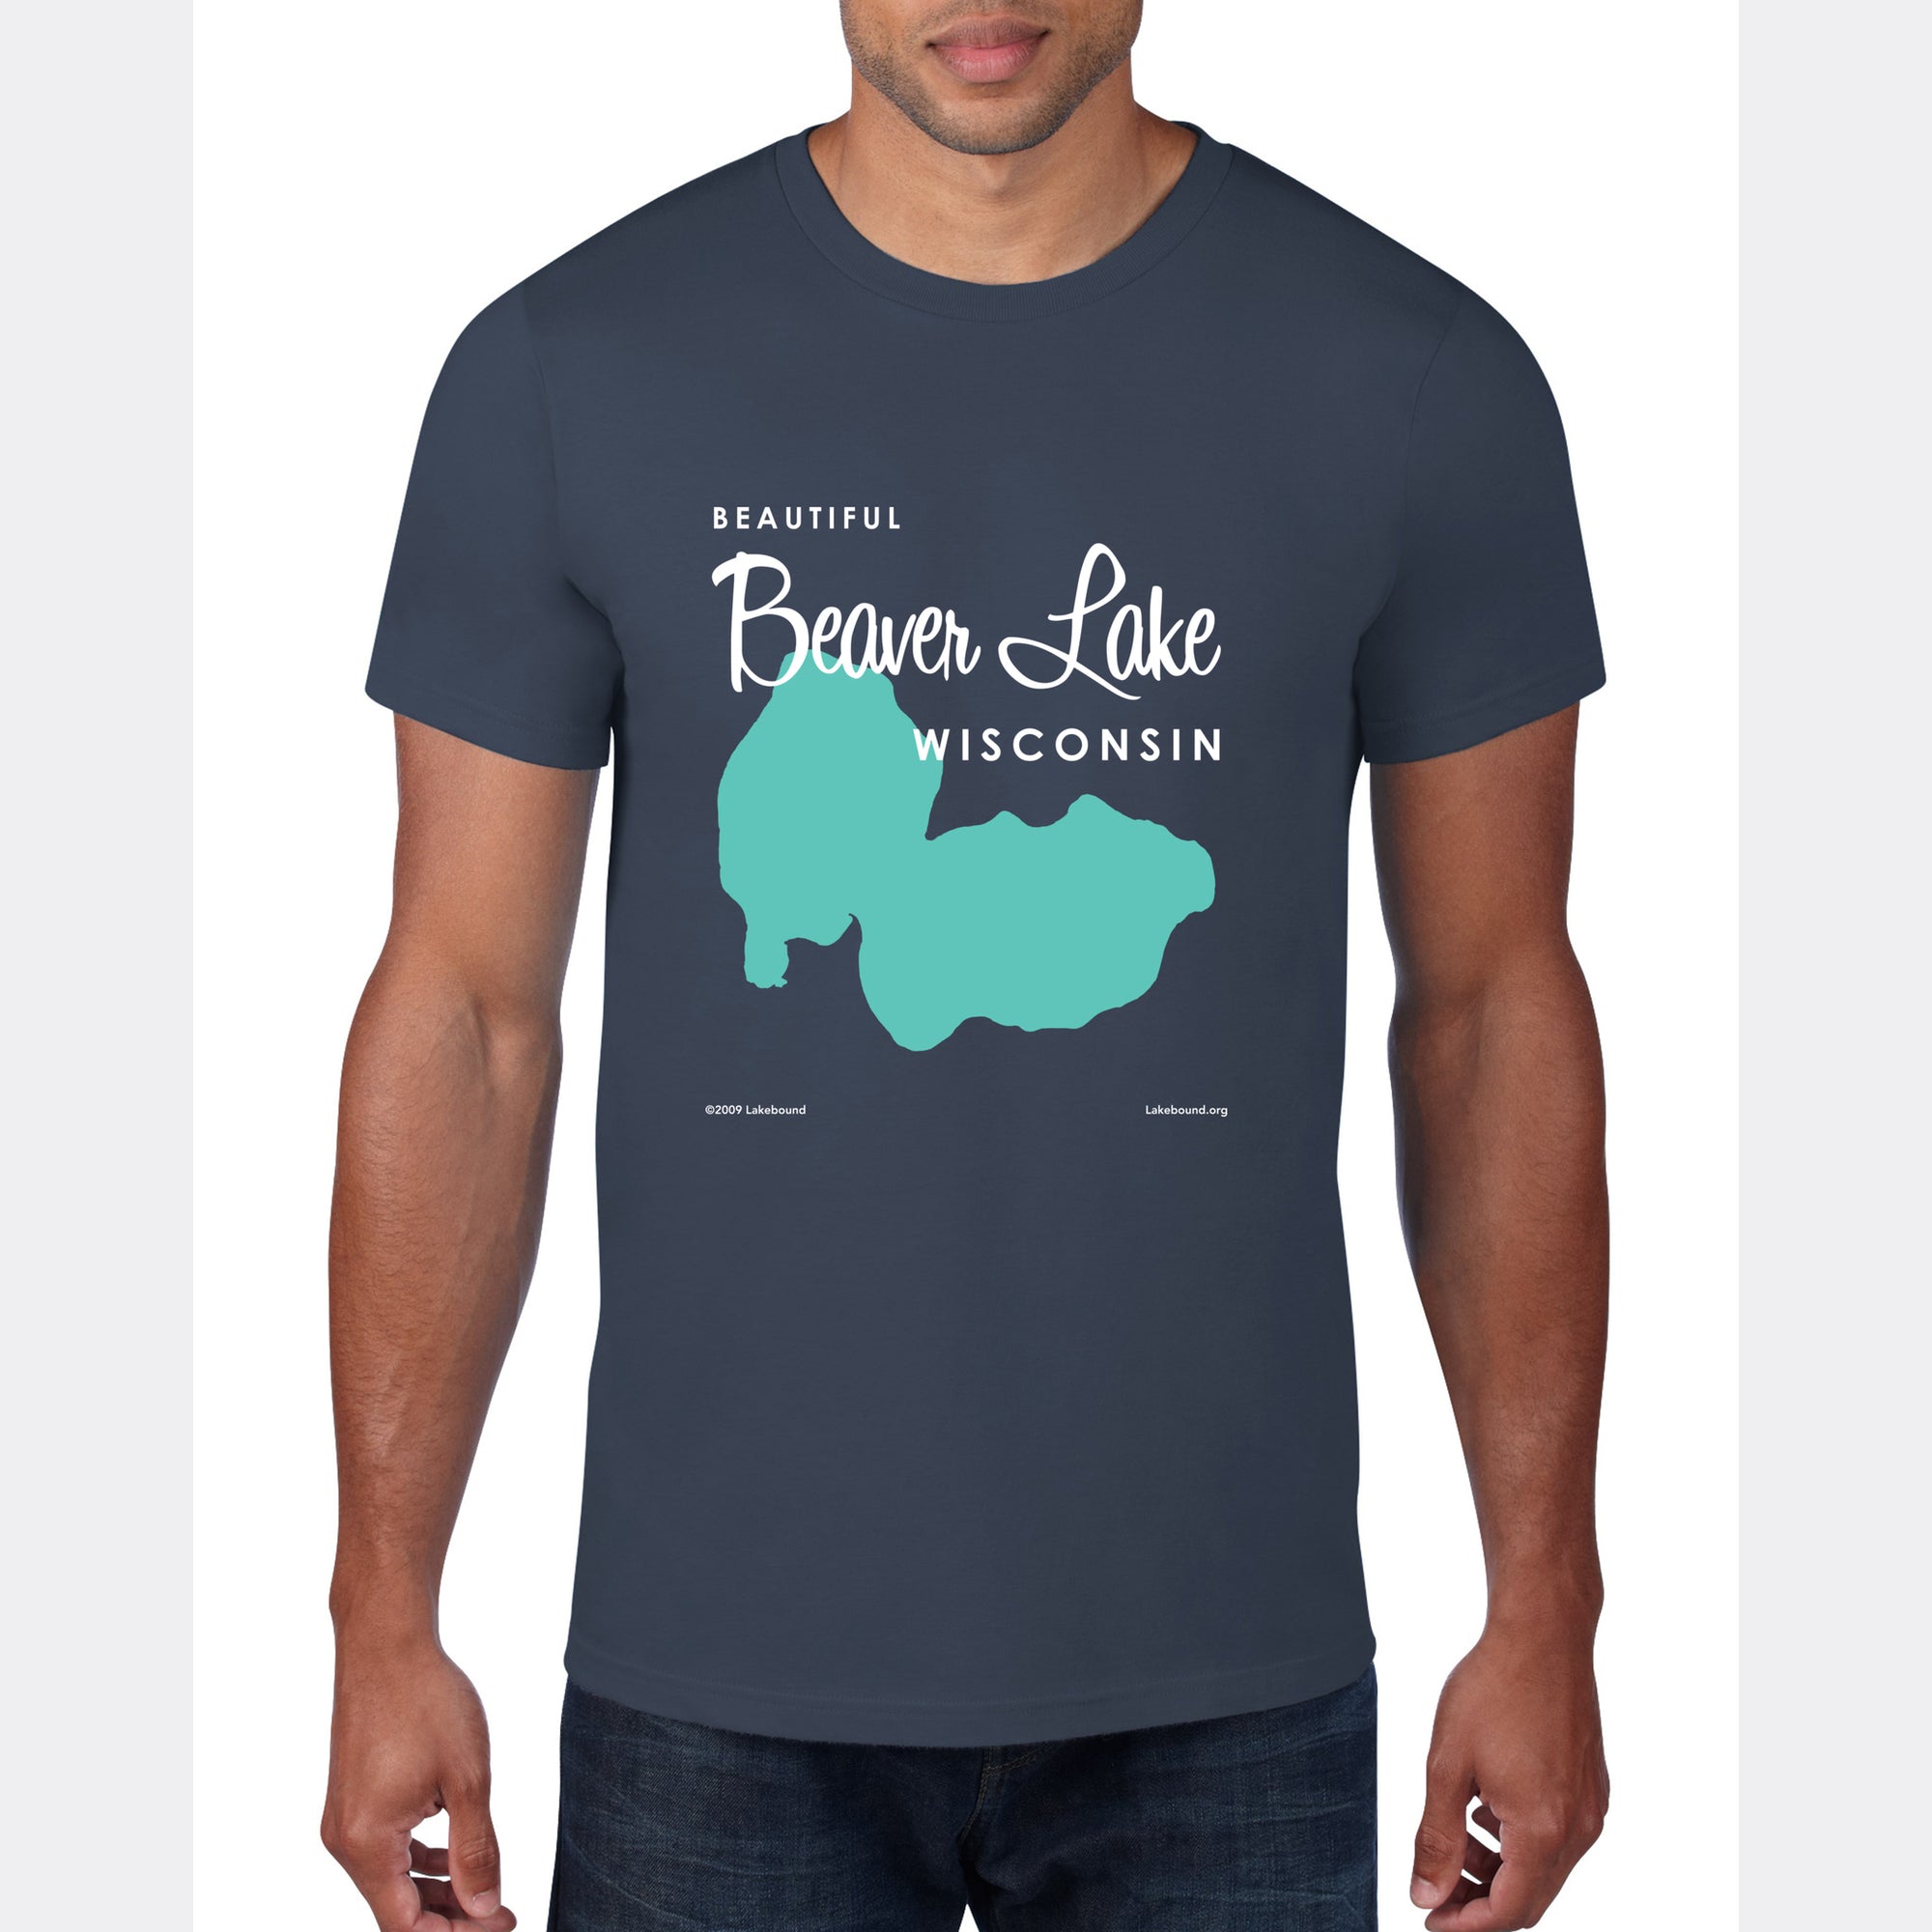 Beaver Lake Wisconsin, T-Shirt